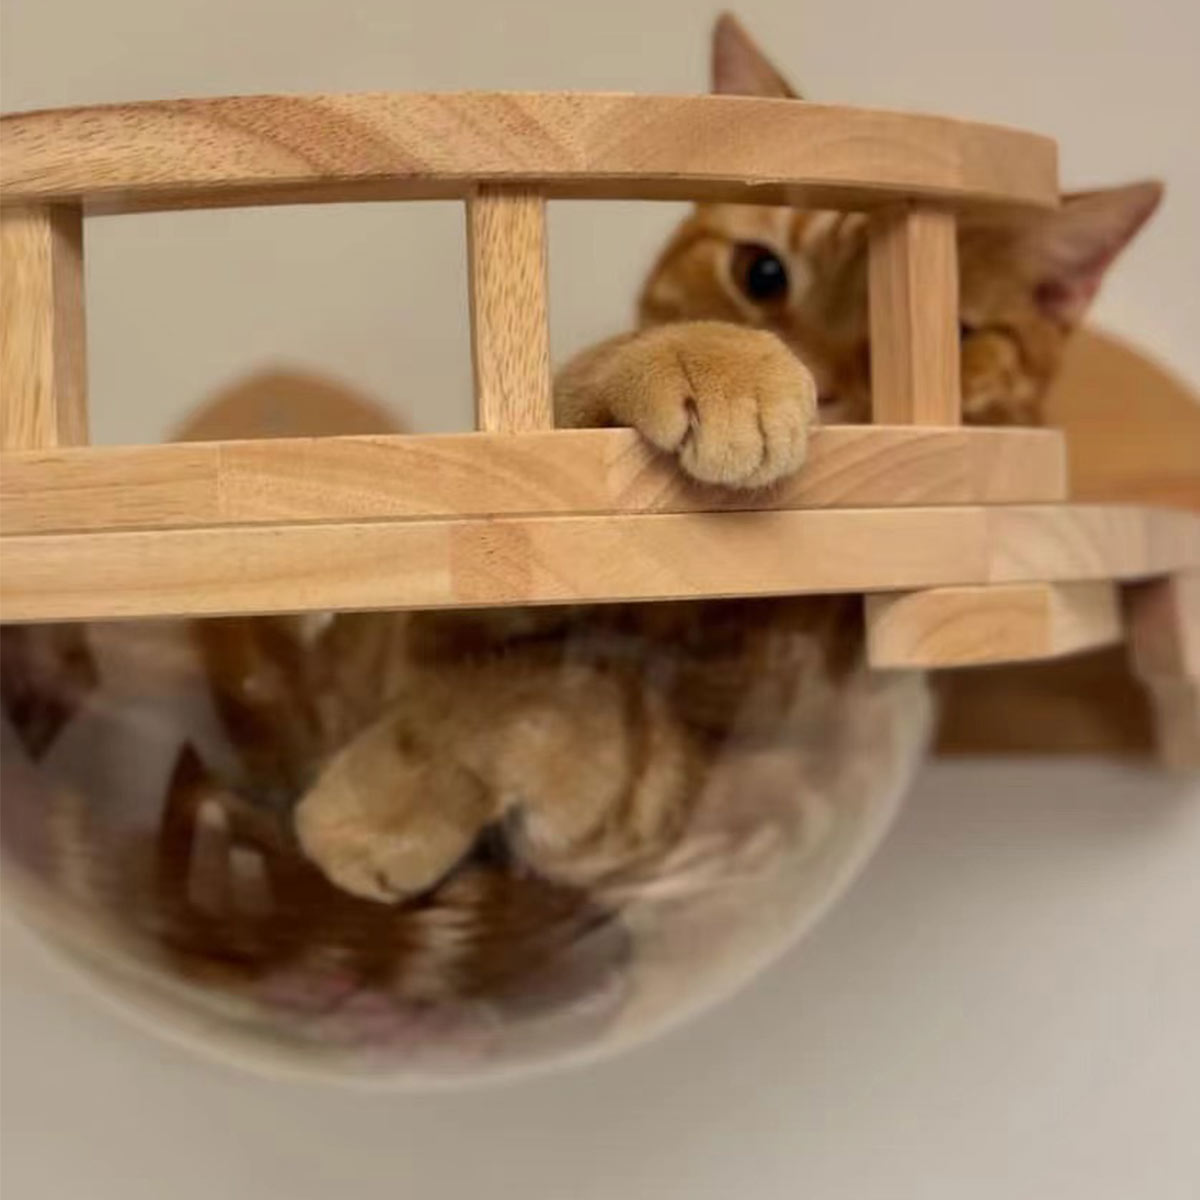 PETOMG Cat Perch, Cat Space Capsule, Cat Bed Furniture, Cat Wall Mounted | Rubber Wood